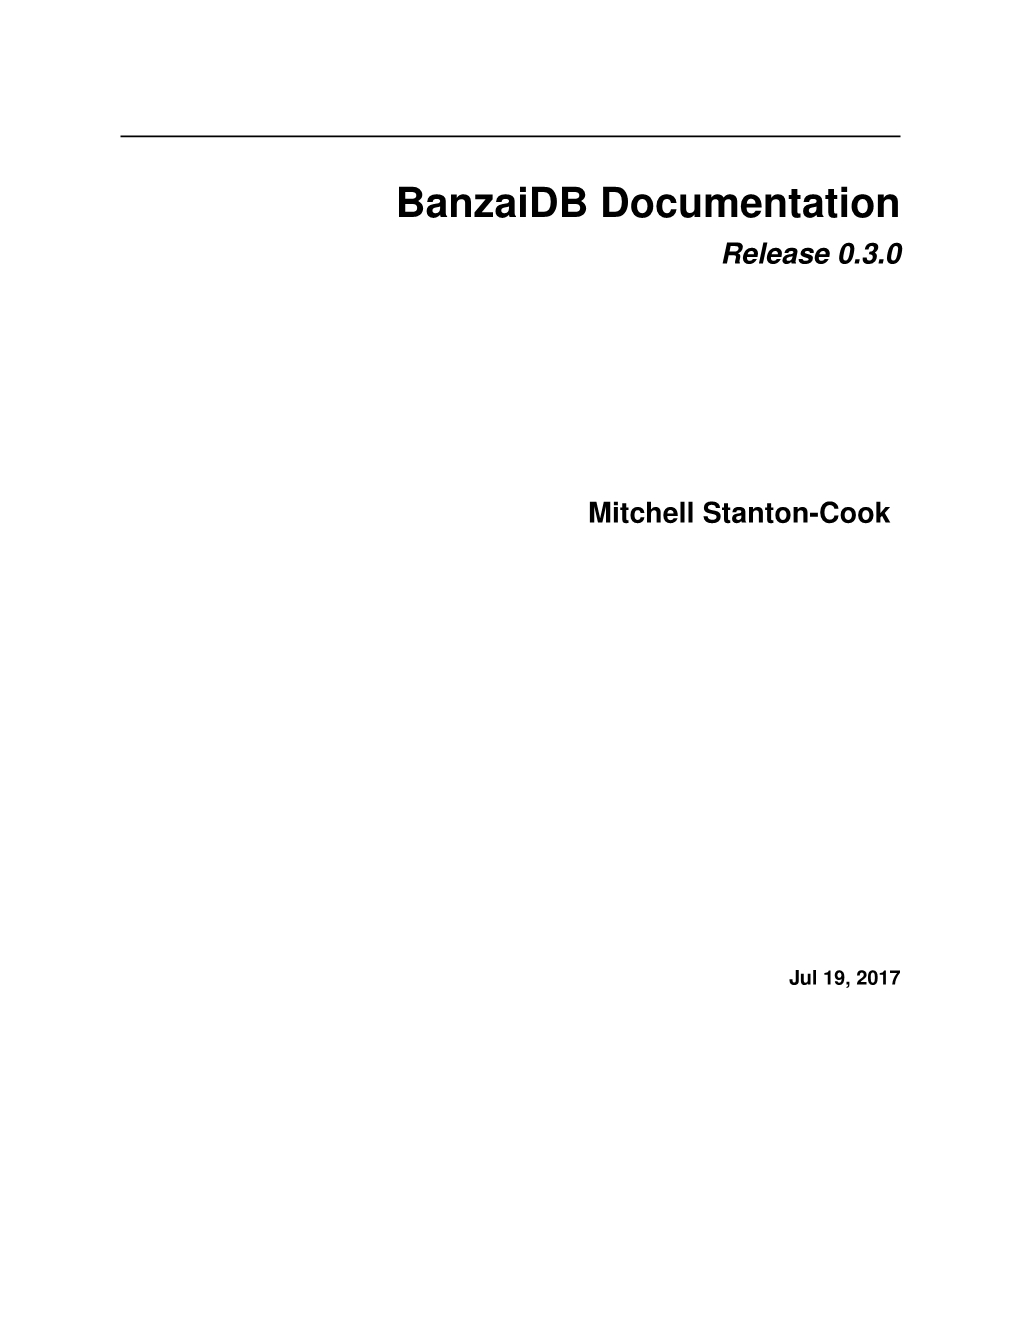 Banzaidb Documentation Release 0.3.0